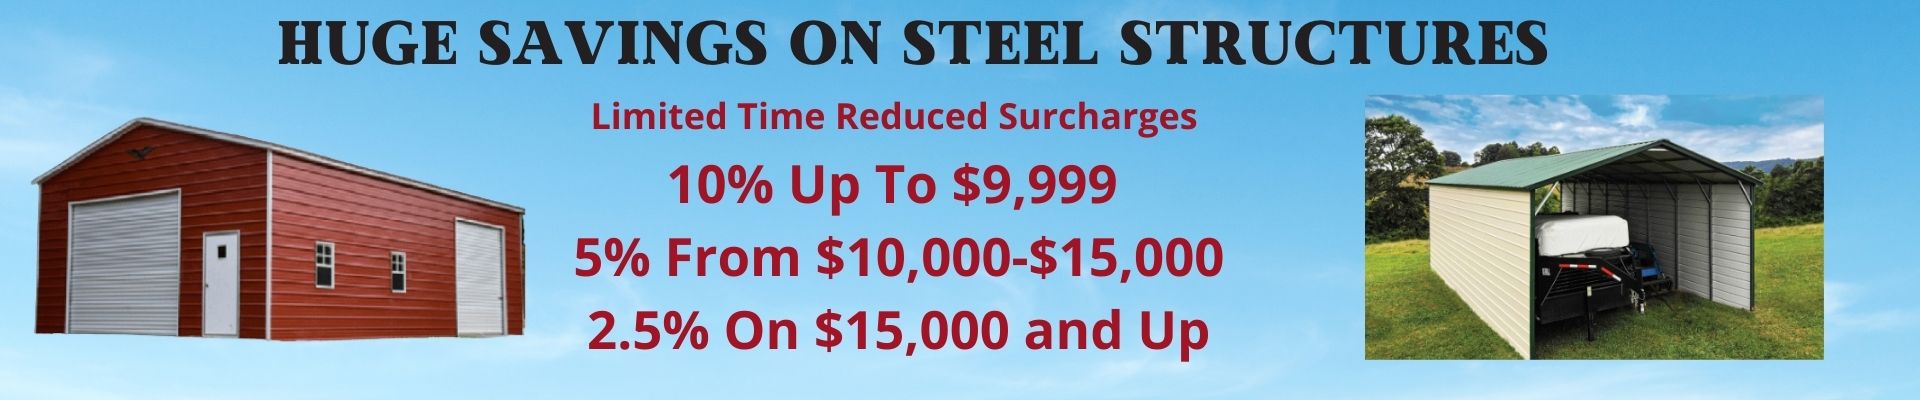 steel structure savings main